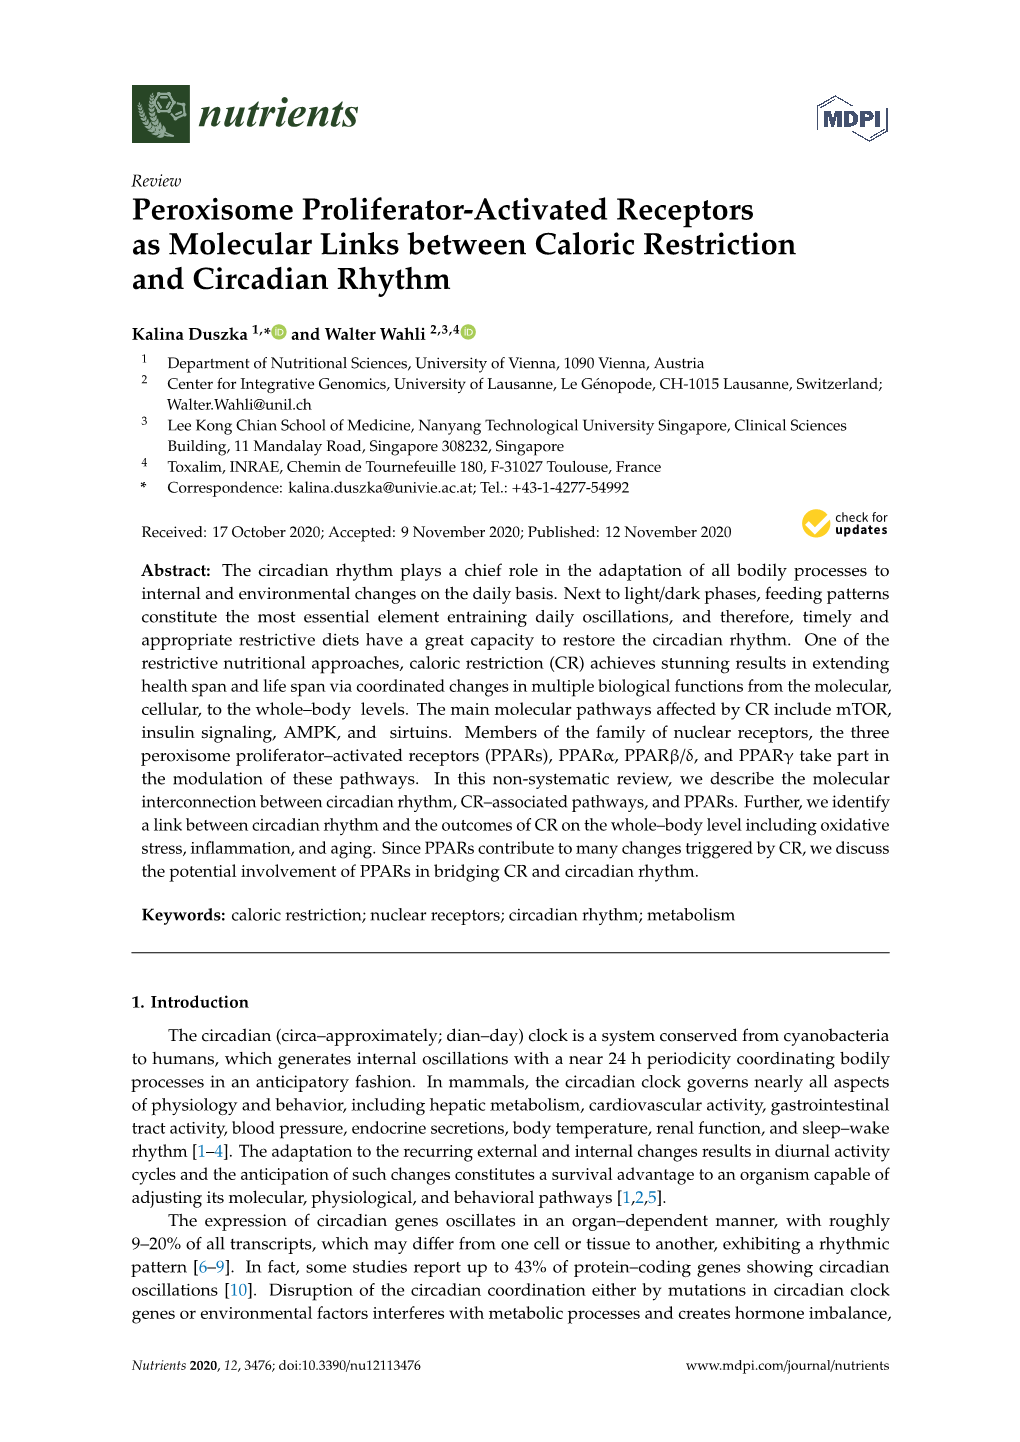 Peroxisome Proliferator-Activated Receptors As Molecular Links Between Caloric Restriction and Circadian Rhythm